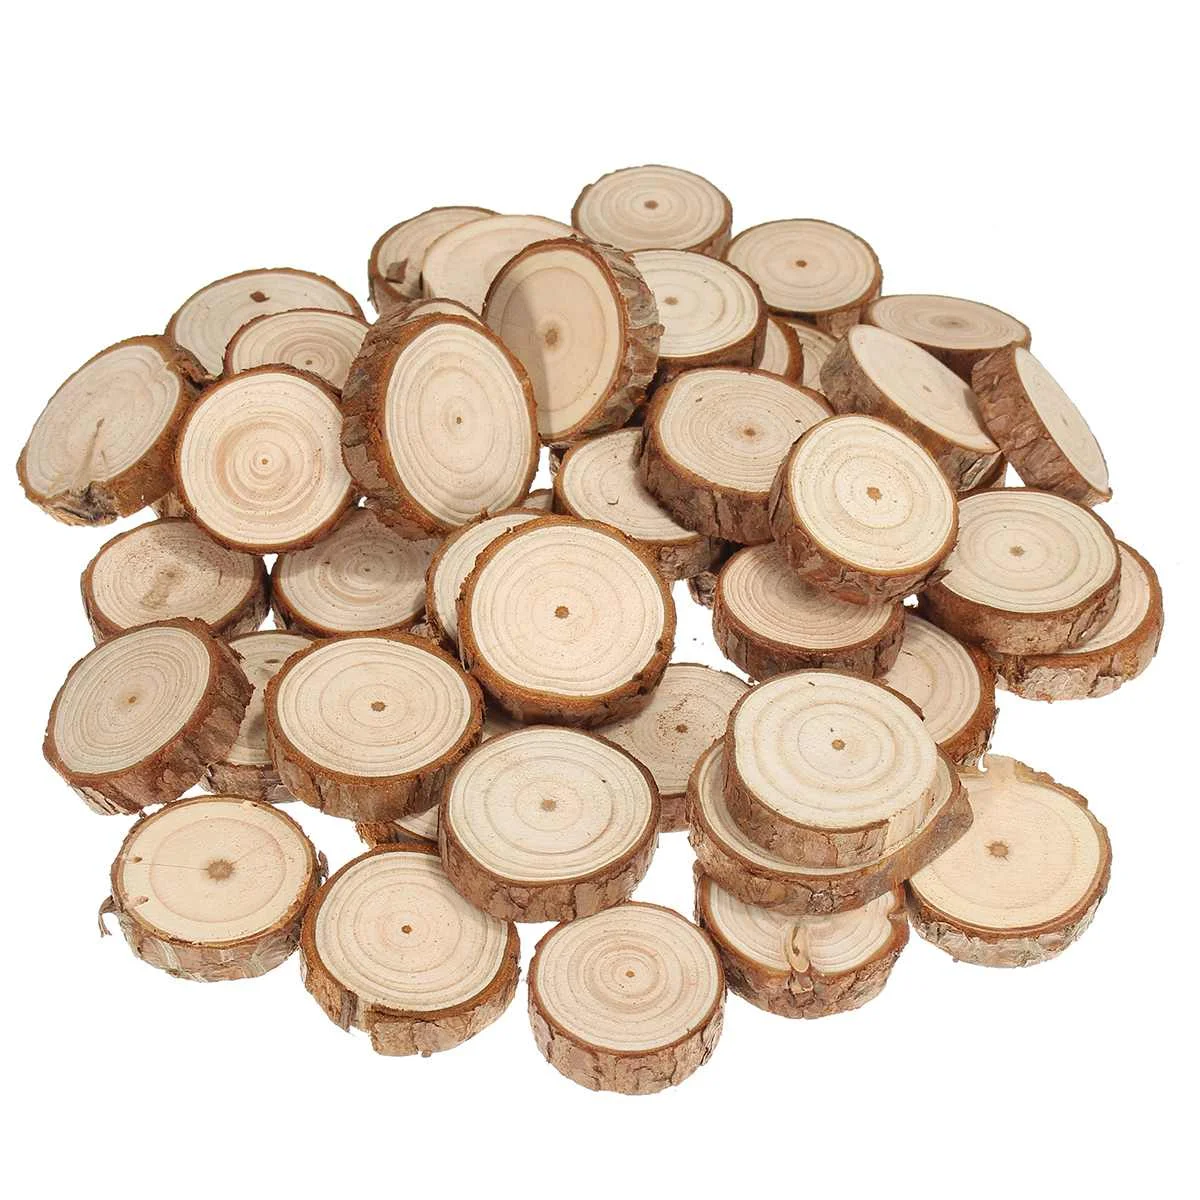 50 Pcs Natural Wood Slices 6-7cm Unfinished Predrilled Log Discs Wooden...